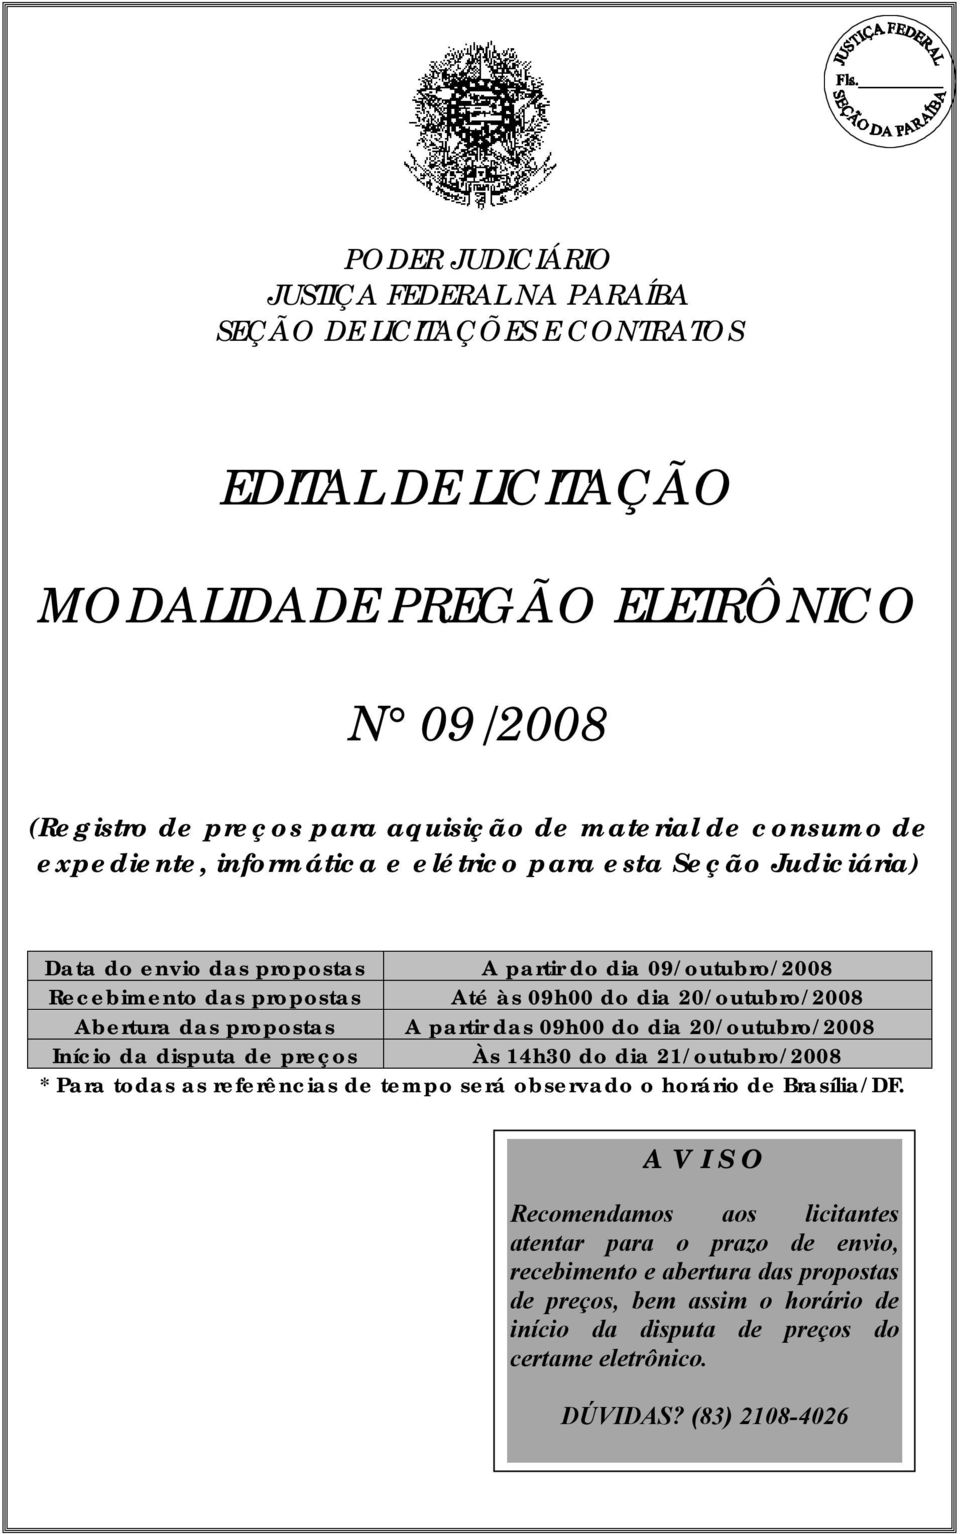 09h00 d dia 20/utubr/2008 Iníci da disputa d prçs Às 14h30 d dia 21/utubr/2008 * Para tdas as rfrências d tmp srá bsrvad hrári d Brasília/DF.